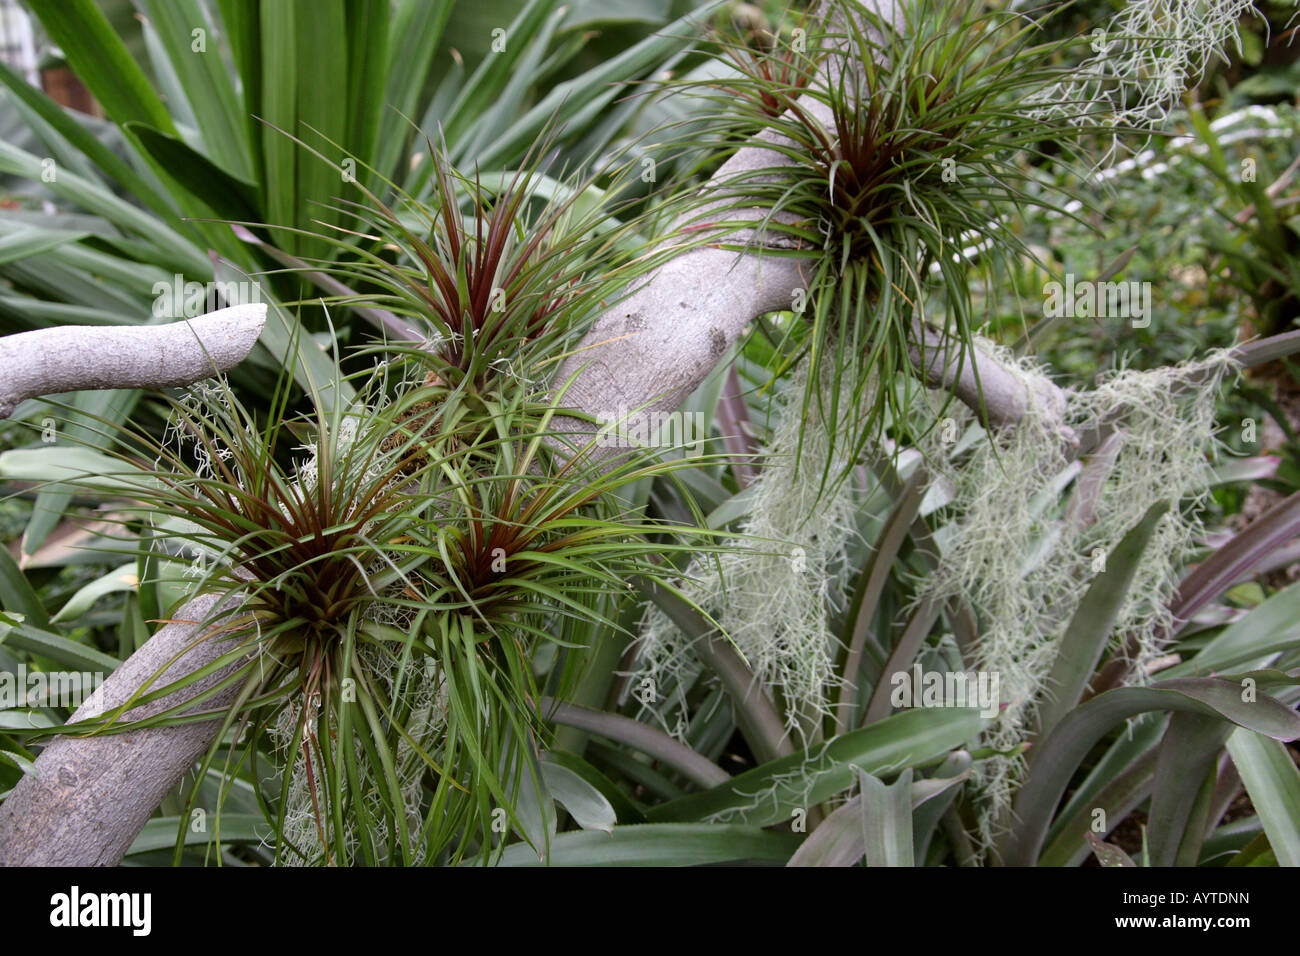 Tillandsia Bromeliad Bromeliaceae Epiphytic Air Plants Stock Photo